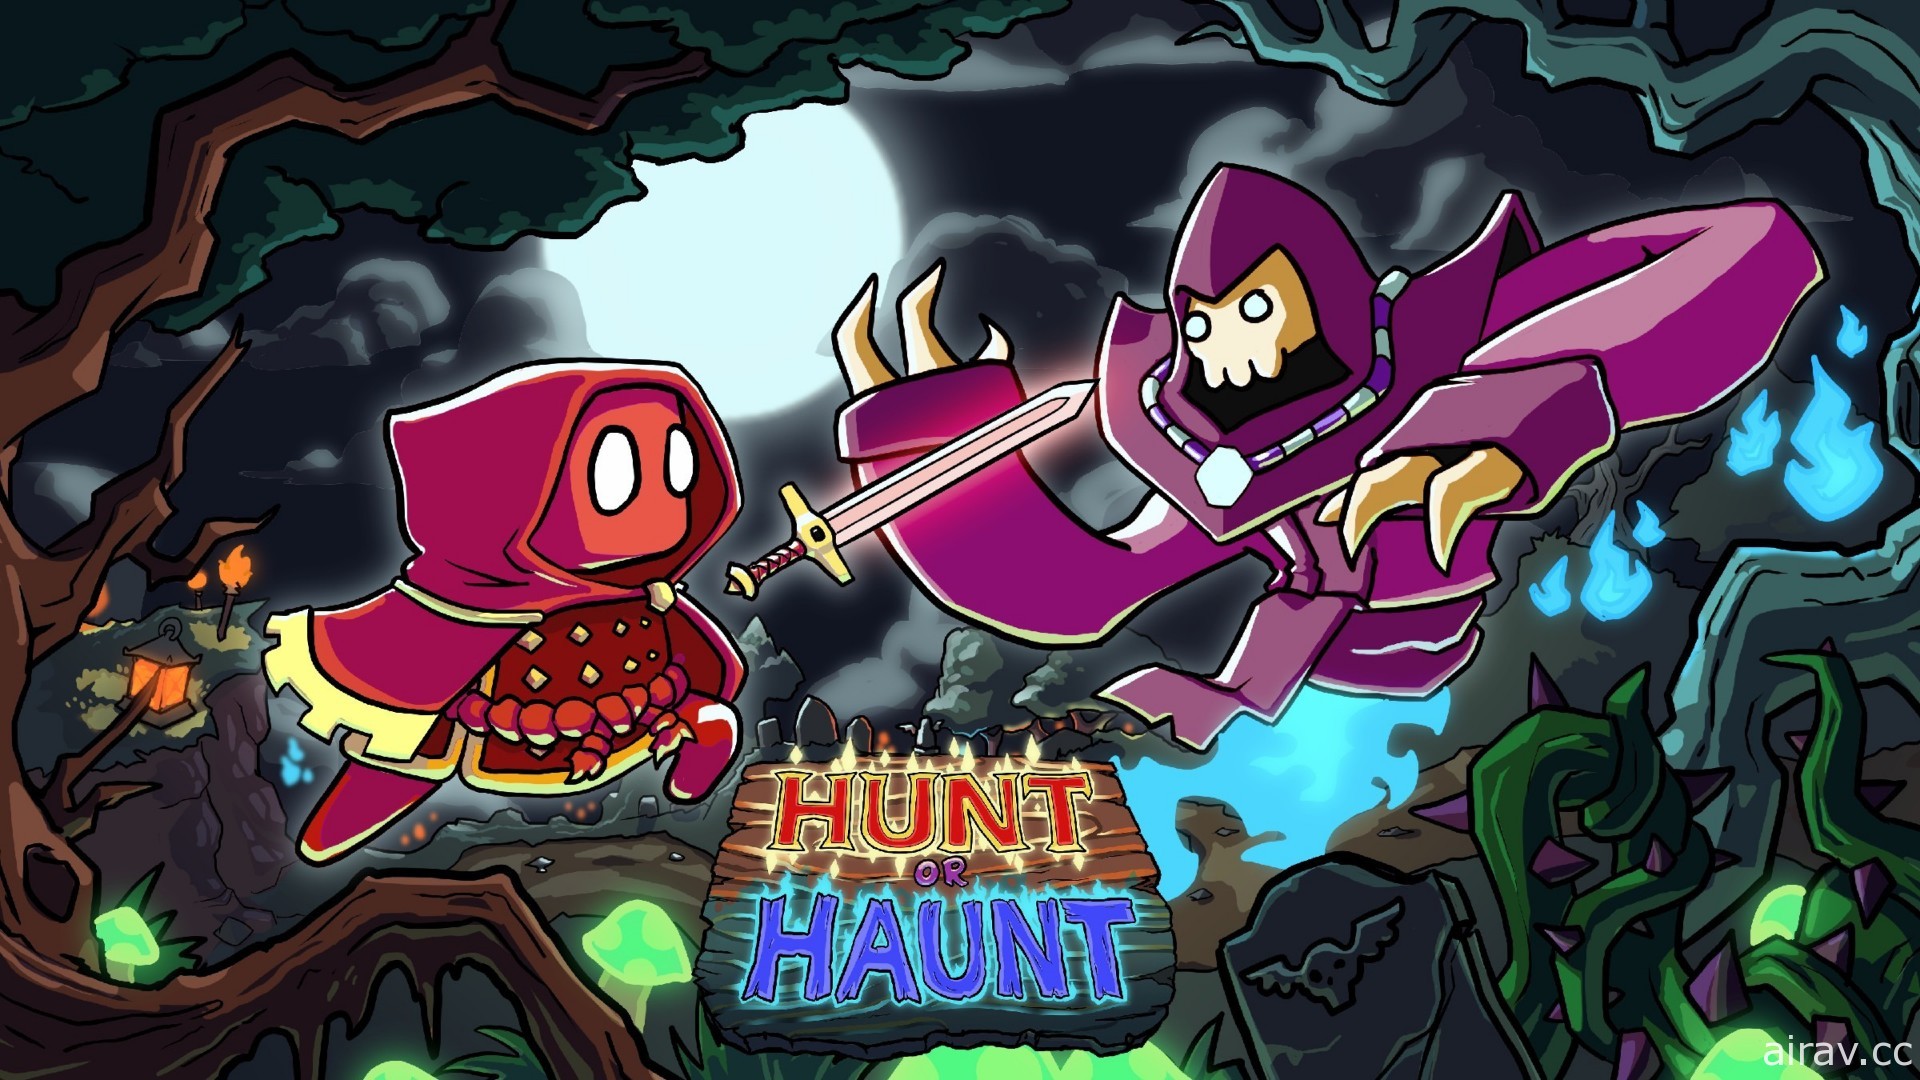 【TpGS 22】台灣派對競技遊戲《閃靈獵人 Hunt-or-Haunt》在電玩展開放搶先體驗